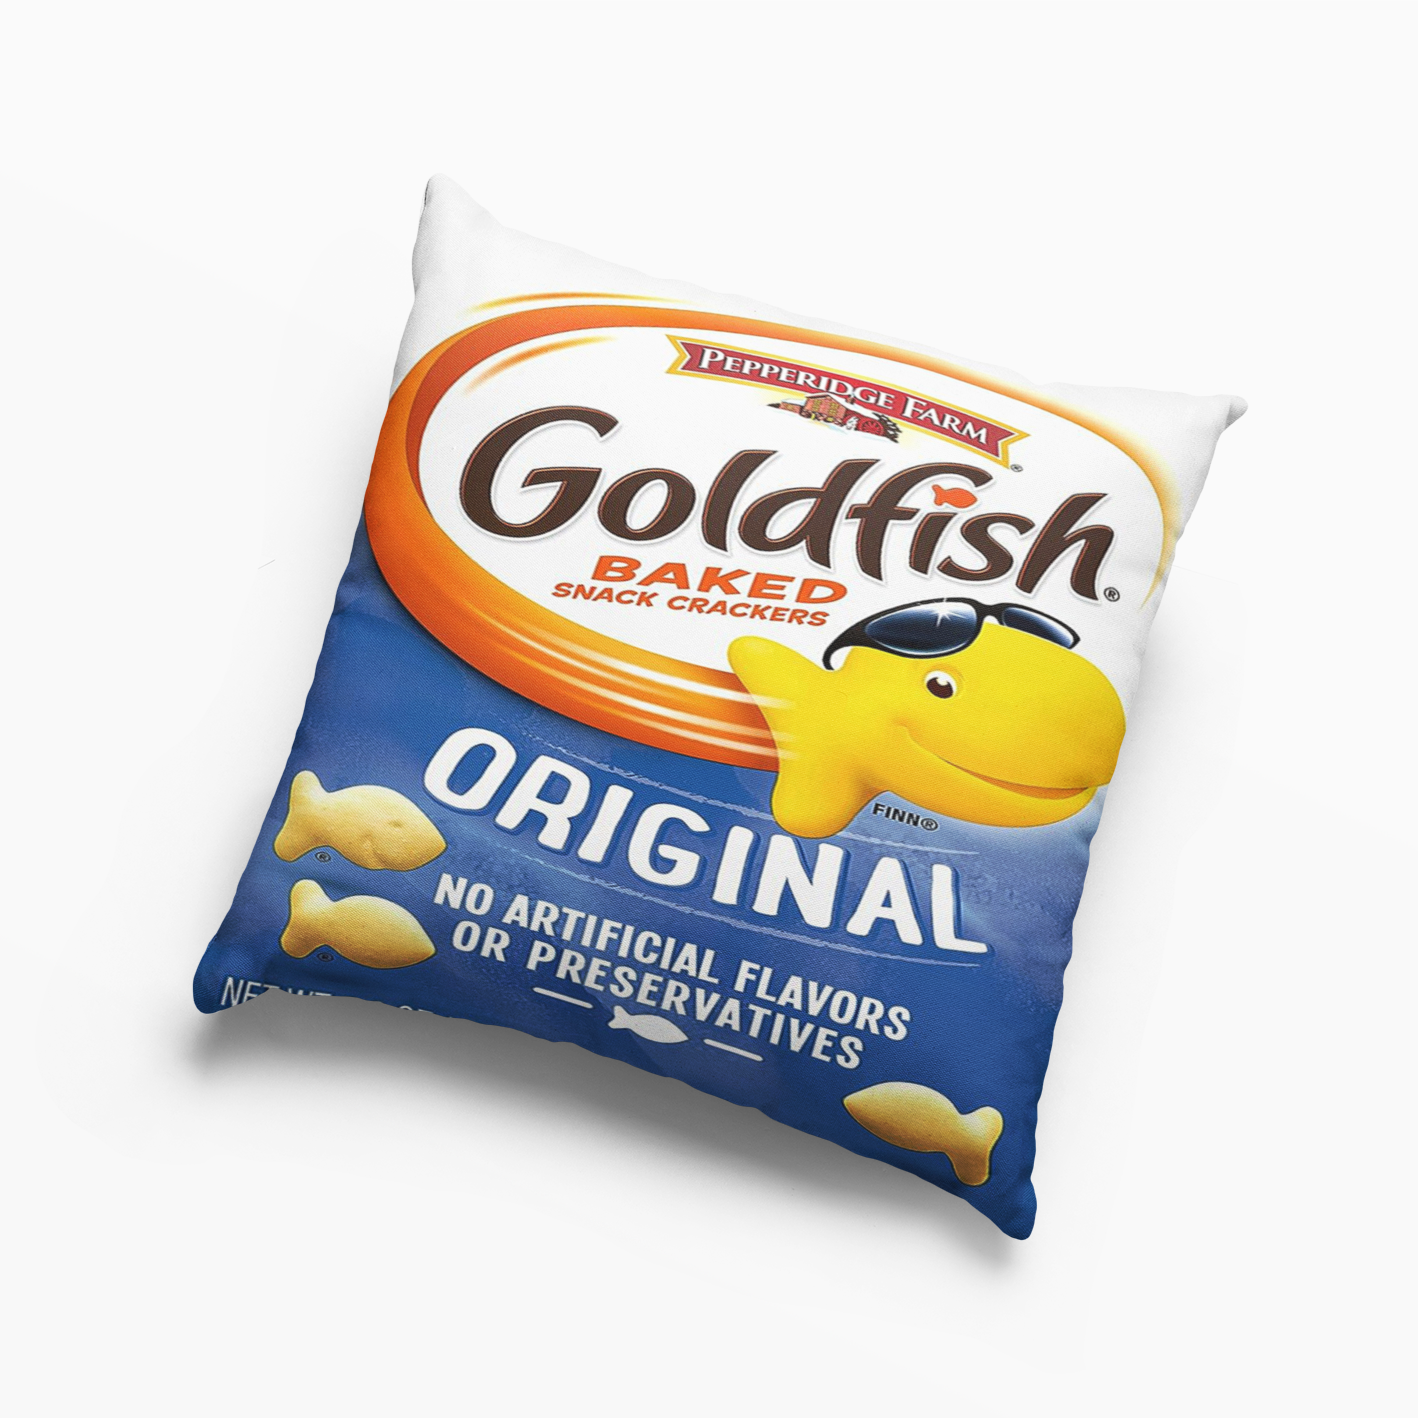 Goldfish Original Crackers, Snack Crackers Pillow